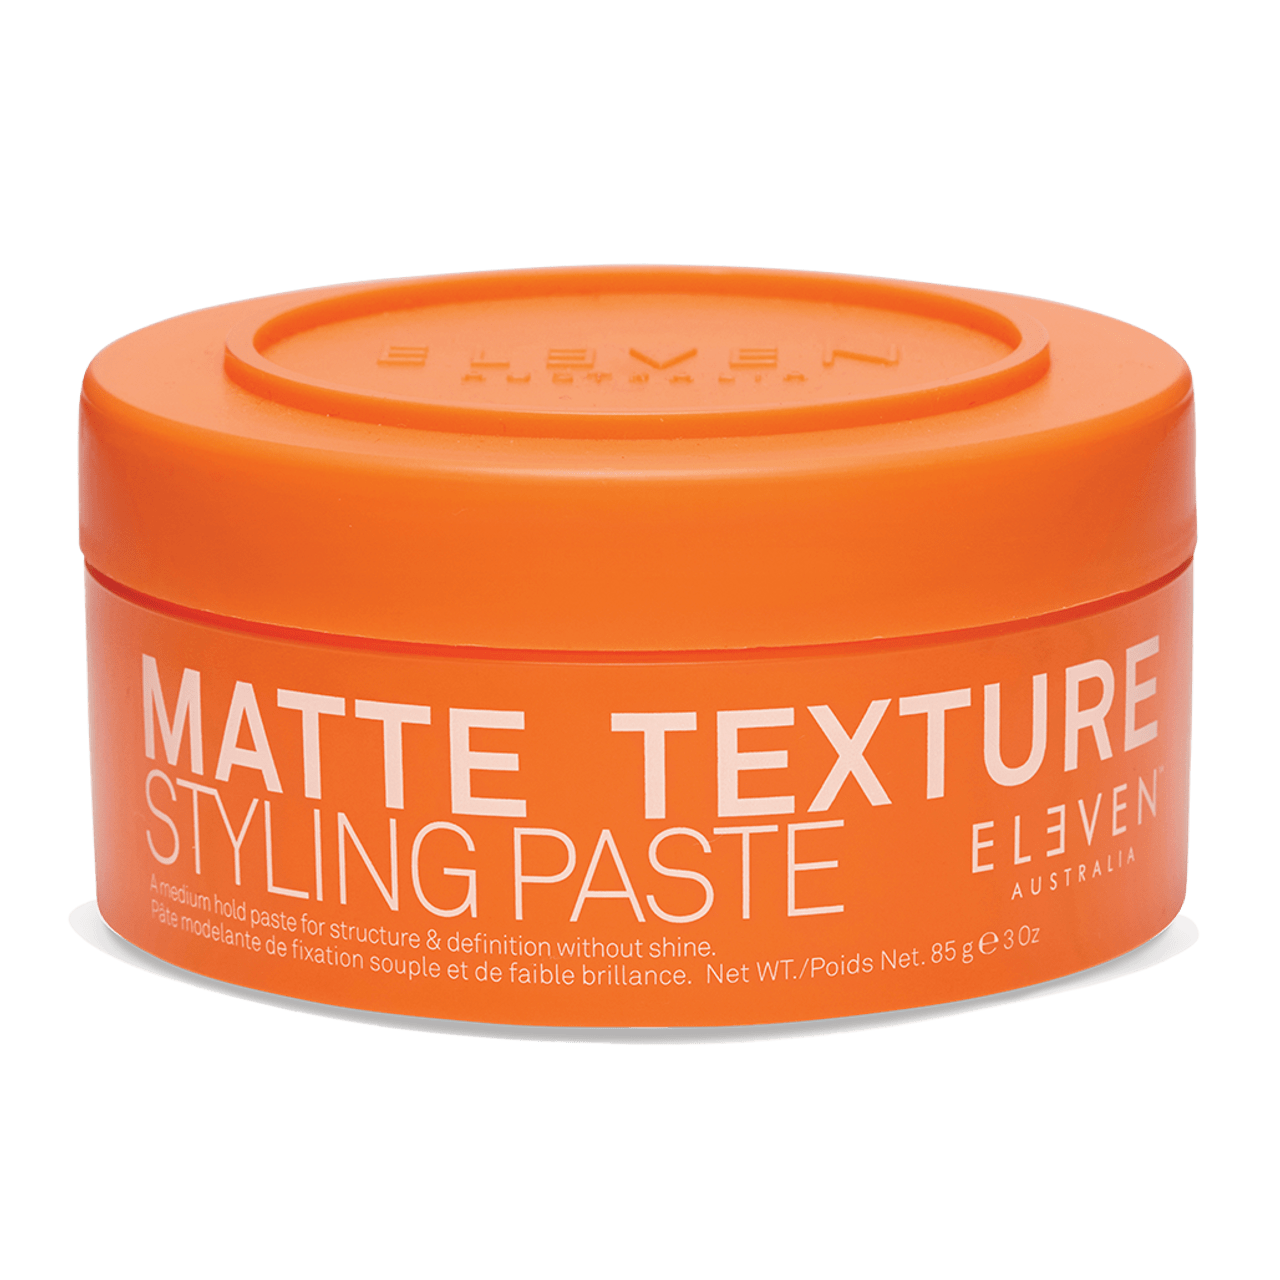 ELEVEN AUSTRALIA_Matte Texture Styling Paste 85g / 3oz_Cosmetic World